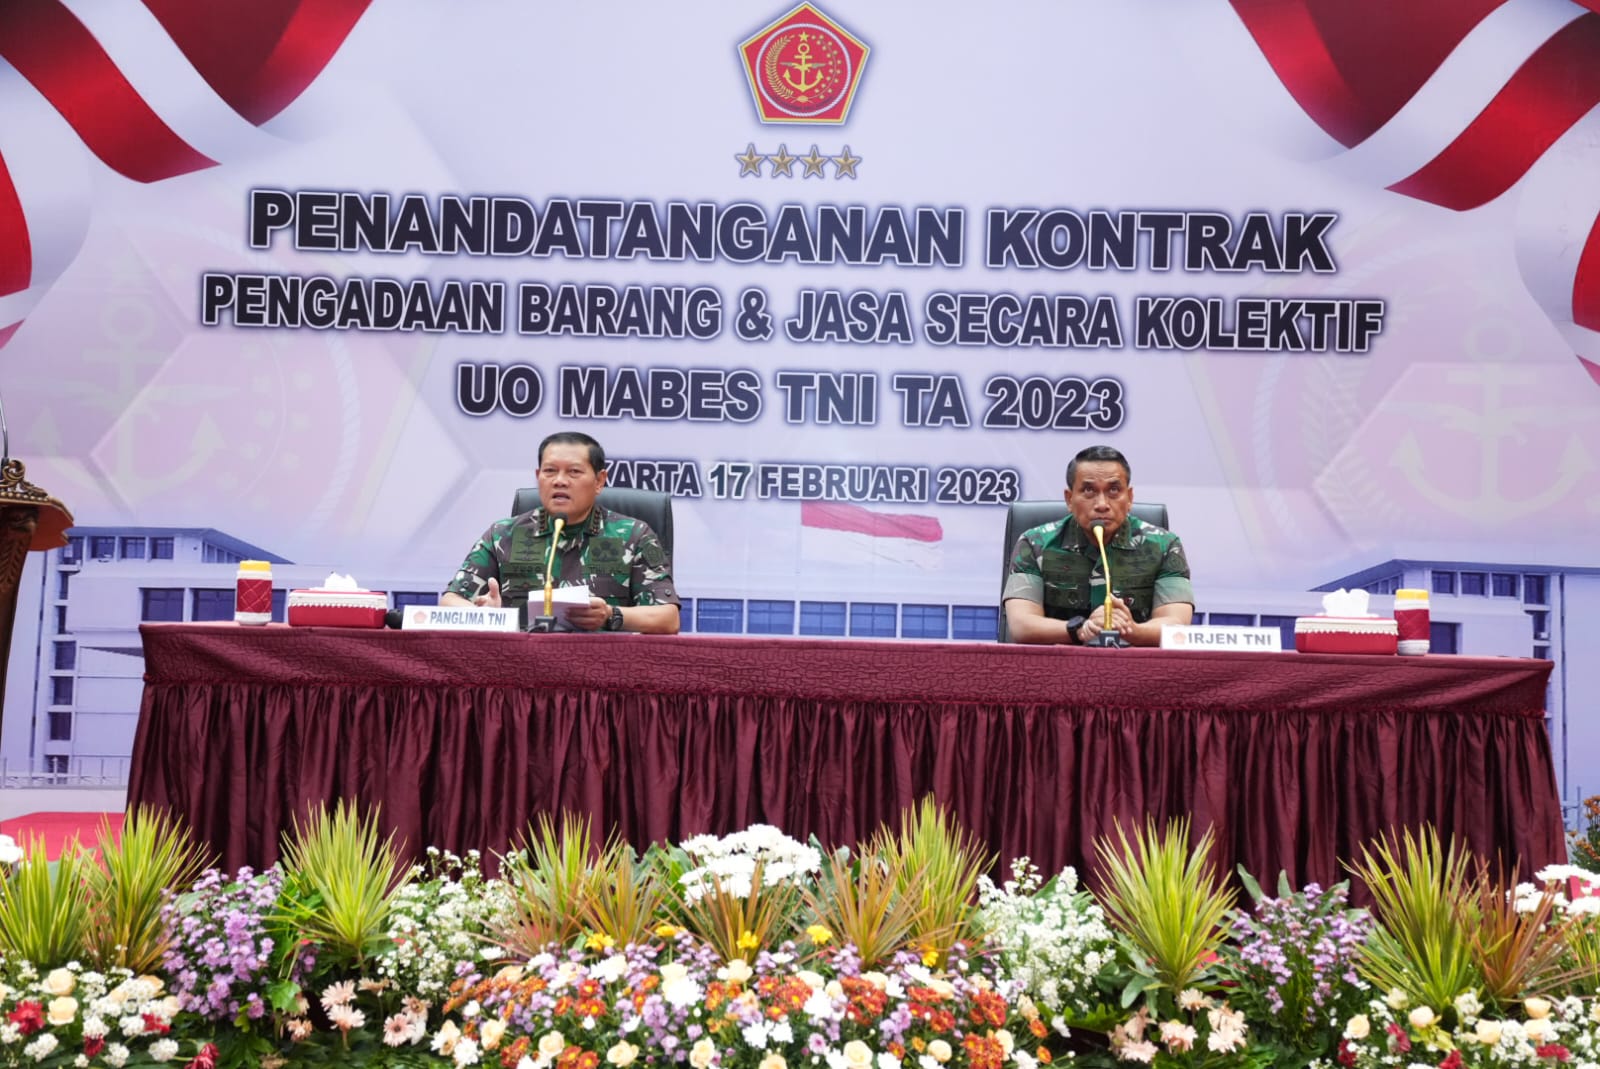 Penandatangan Kontrak Pengadaan Barang dan Jasa Secara Kolektif Unit Organisasi Markas Besar (UO Mabes) TNI Tahun Anggaran 2023